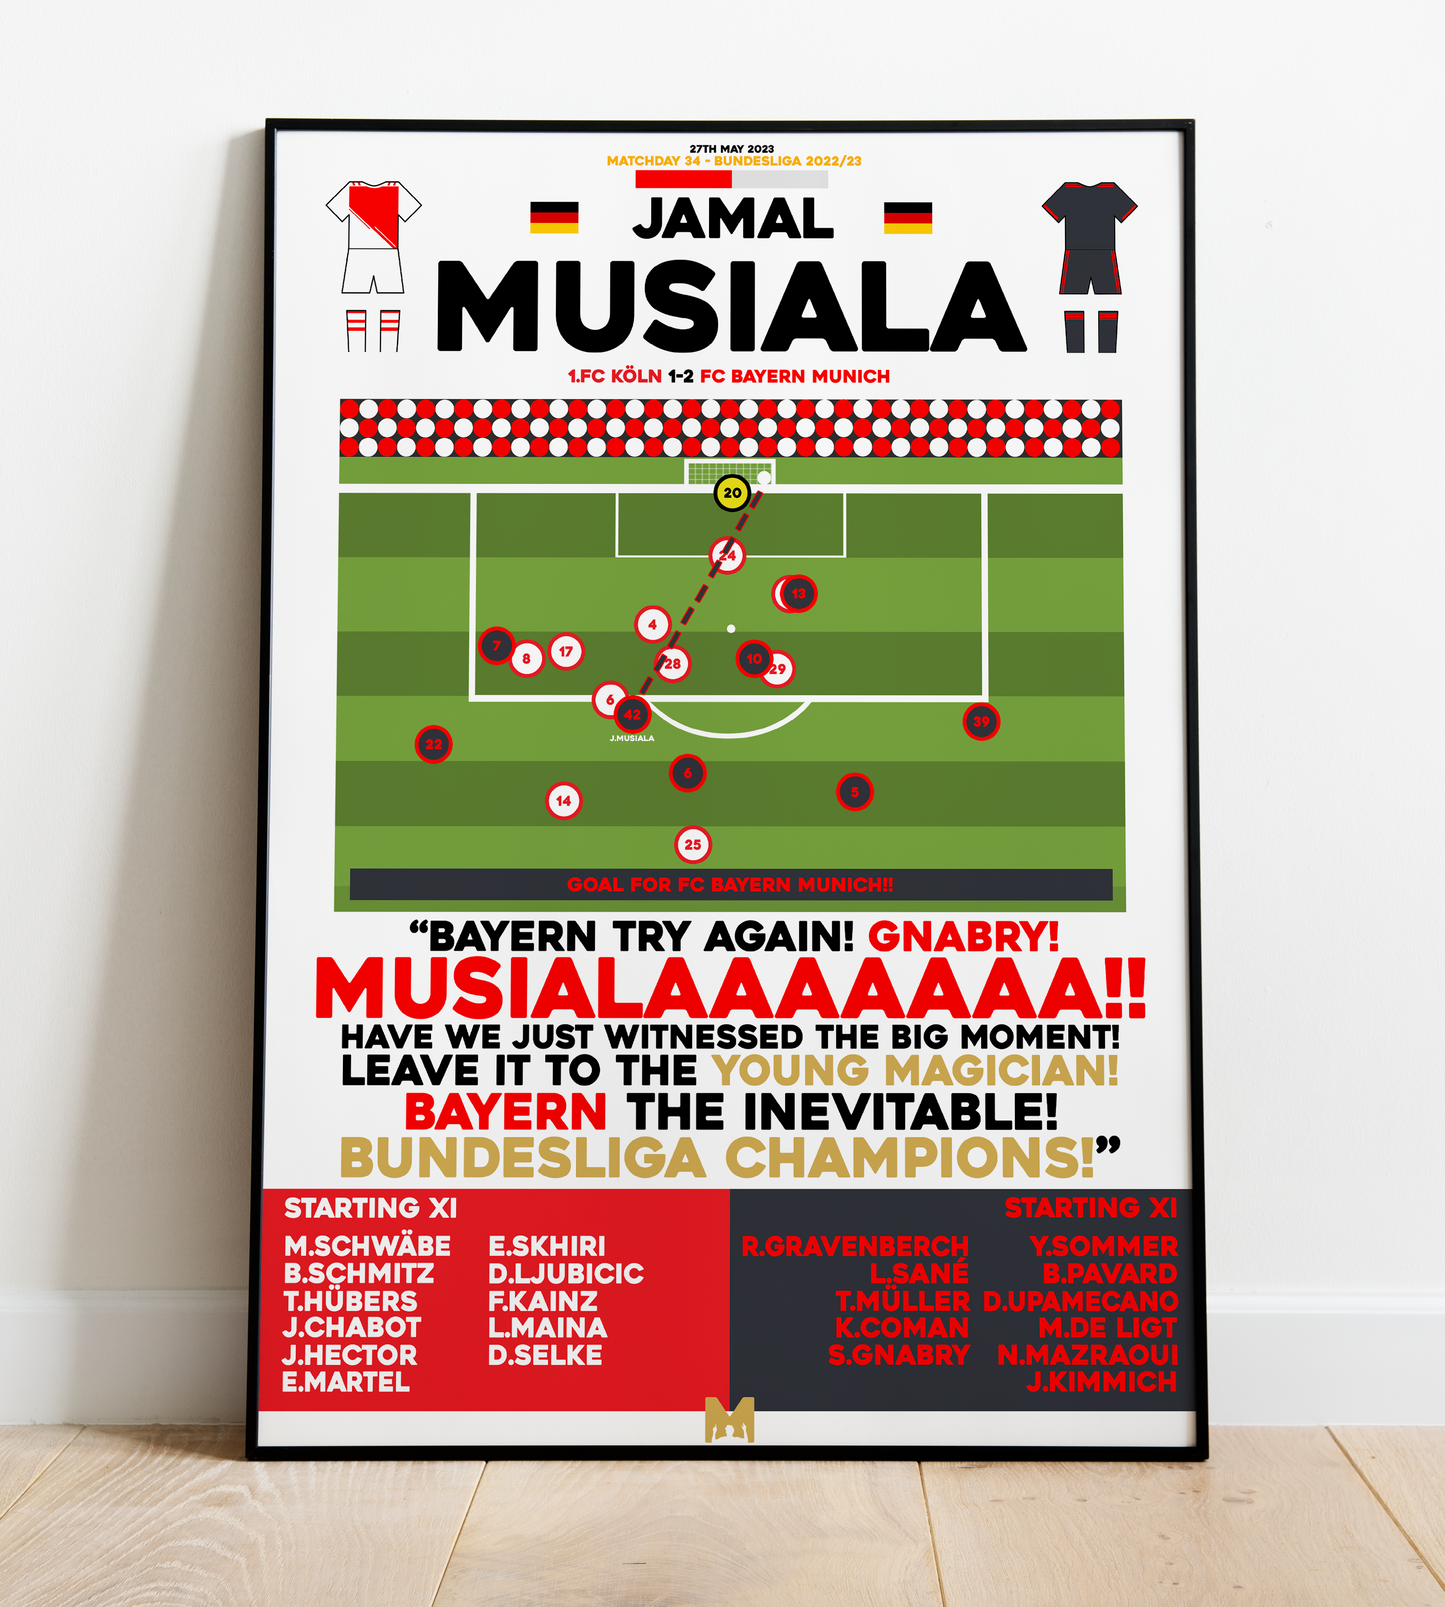 Jamal Musiala Goal vs 1. FC Köln - Bundesliga 2022/23 - FC Bayern Munich